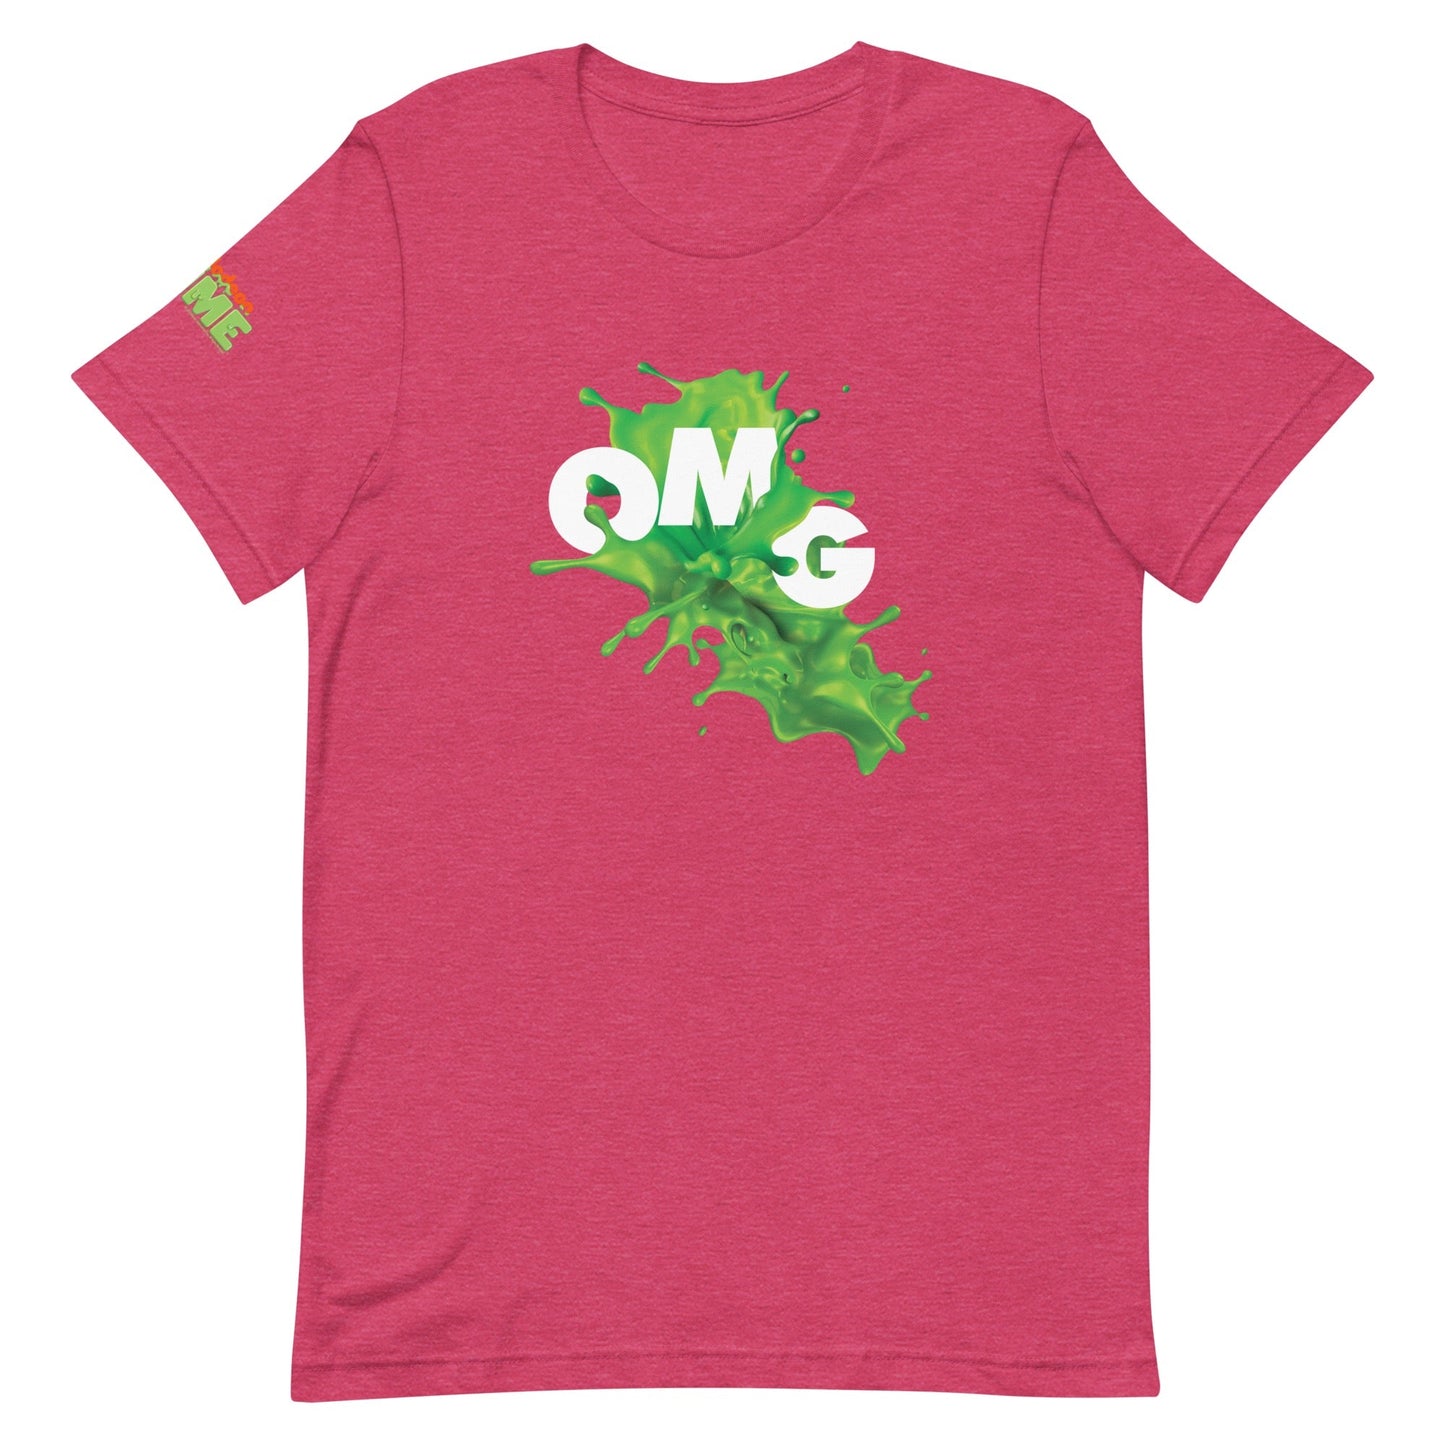 Slime OMG Adult Short Sleeve T - Shirt - Paramount Shop